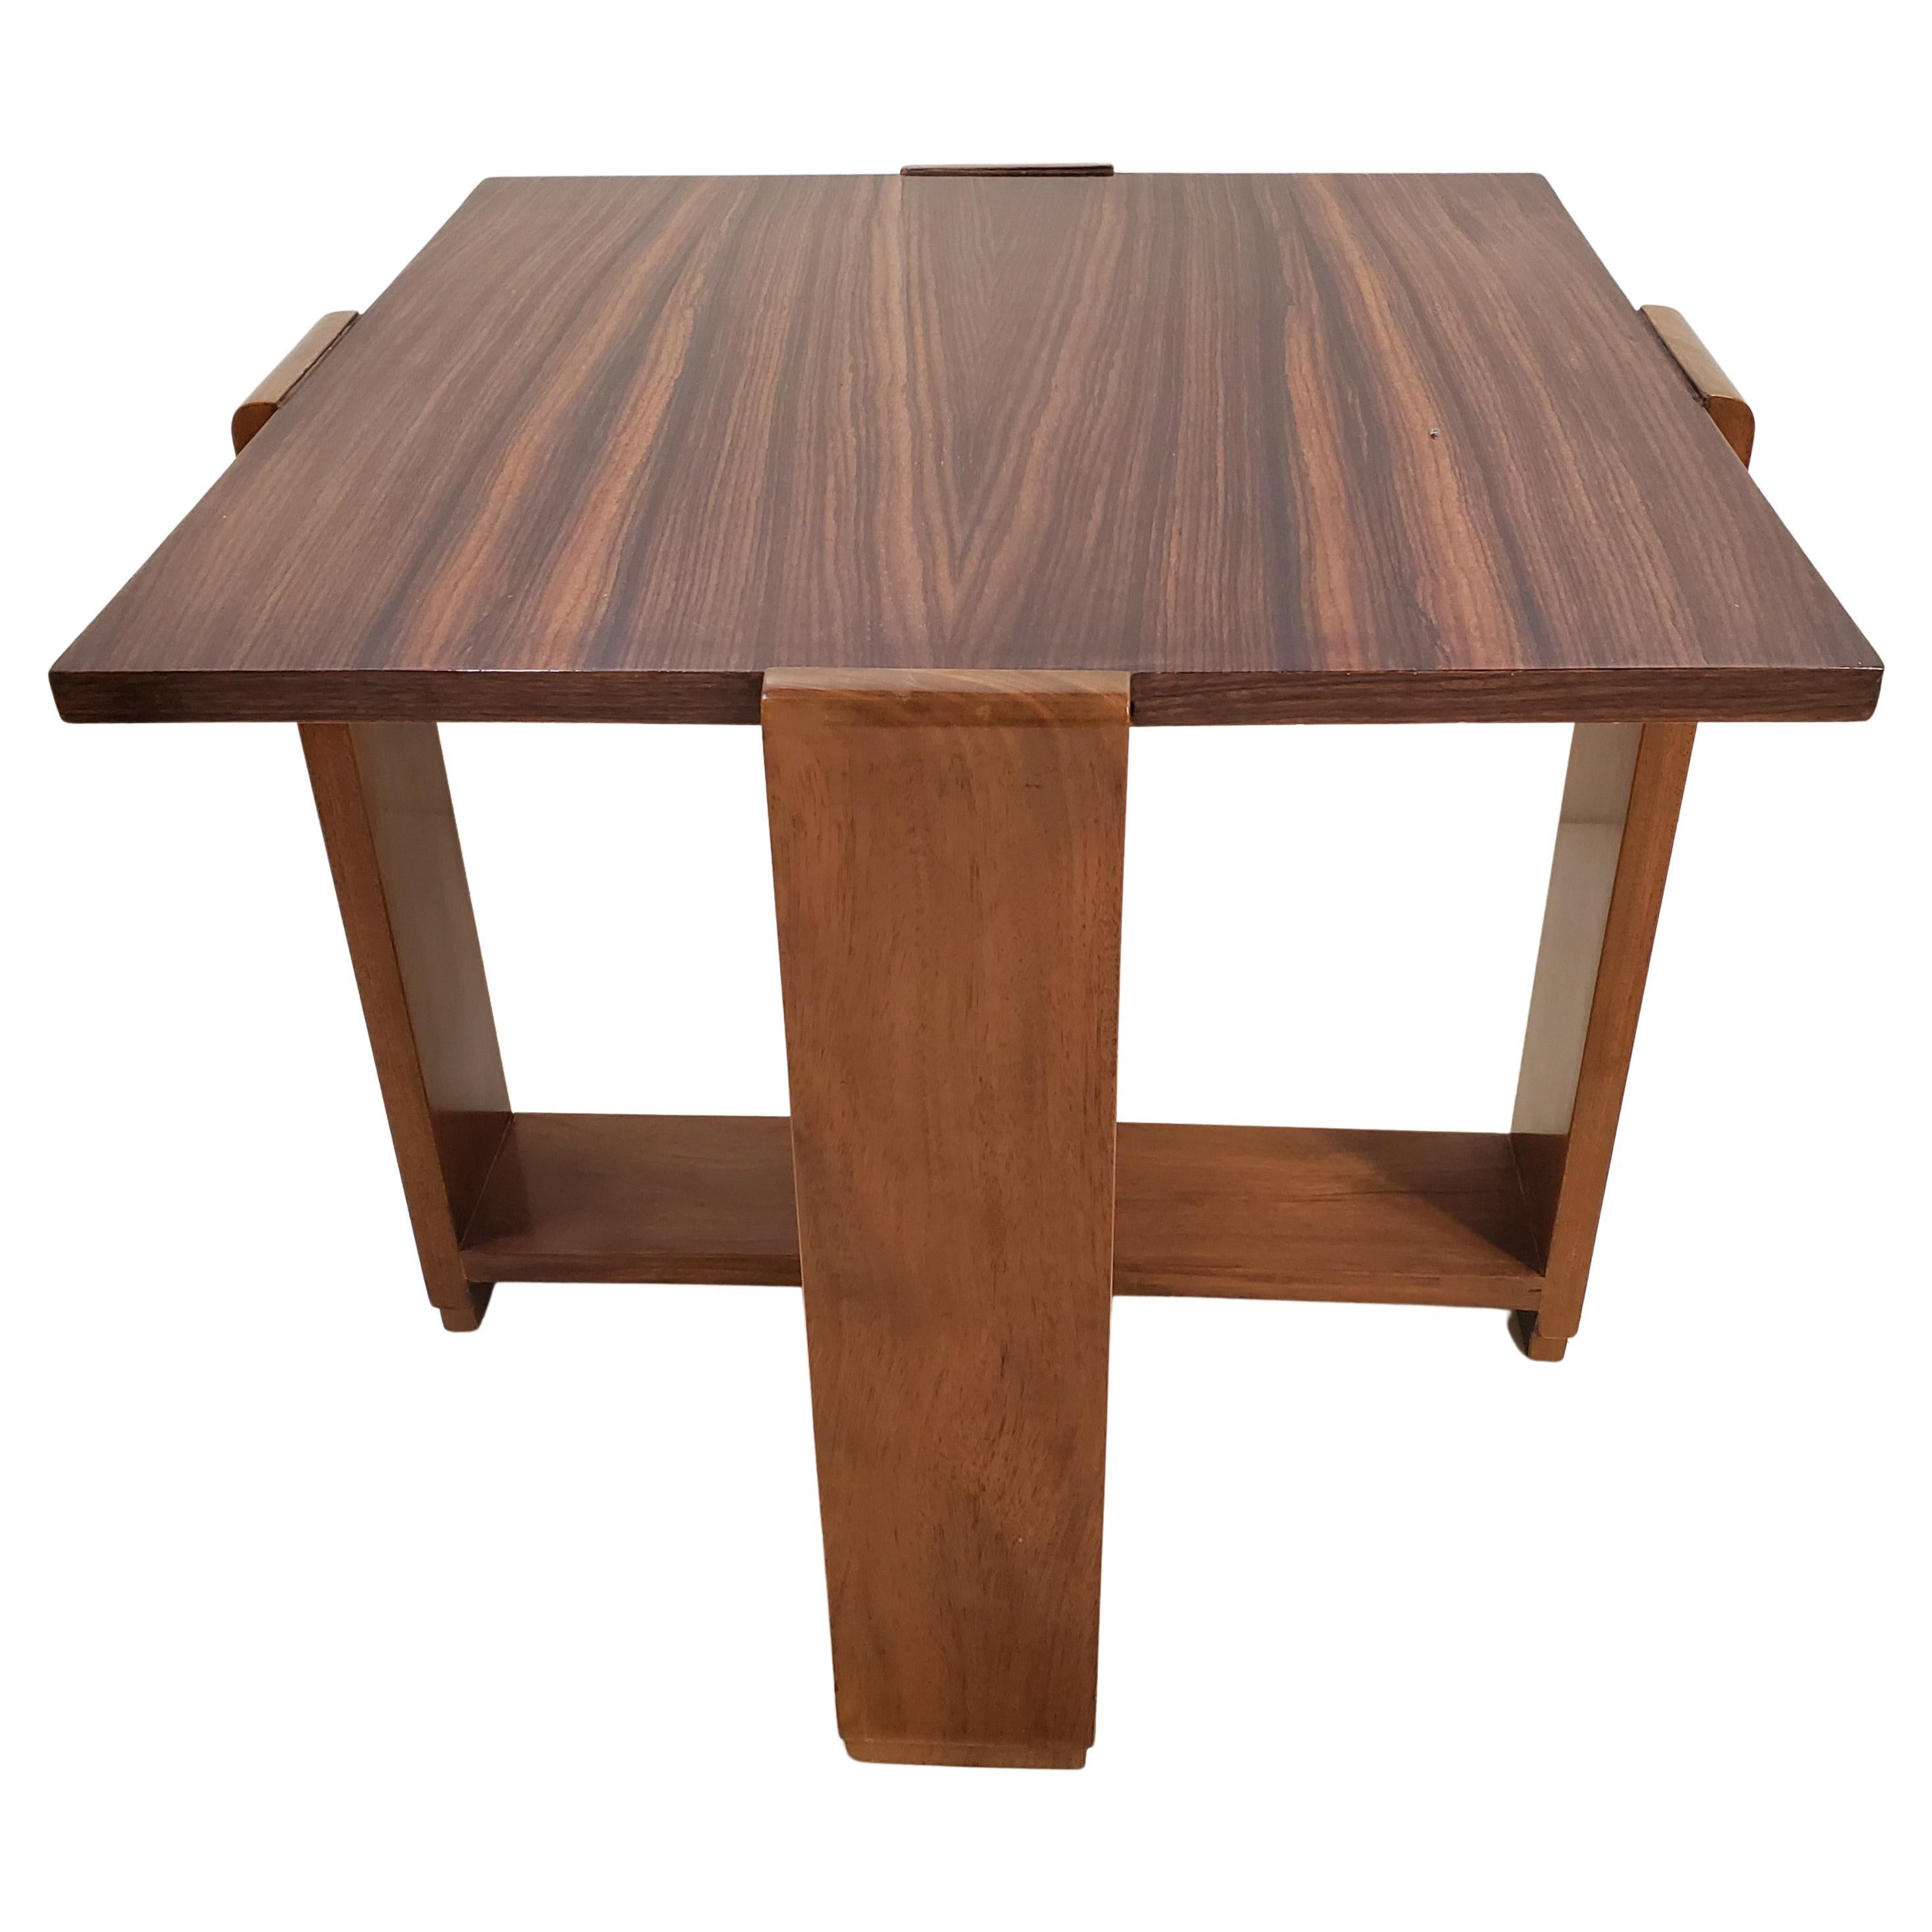 Original French Art Deco Macassar Ebony Square Table, Michel Roux-Spitz For Sale